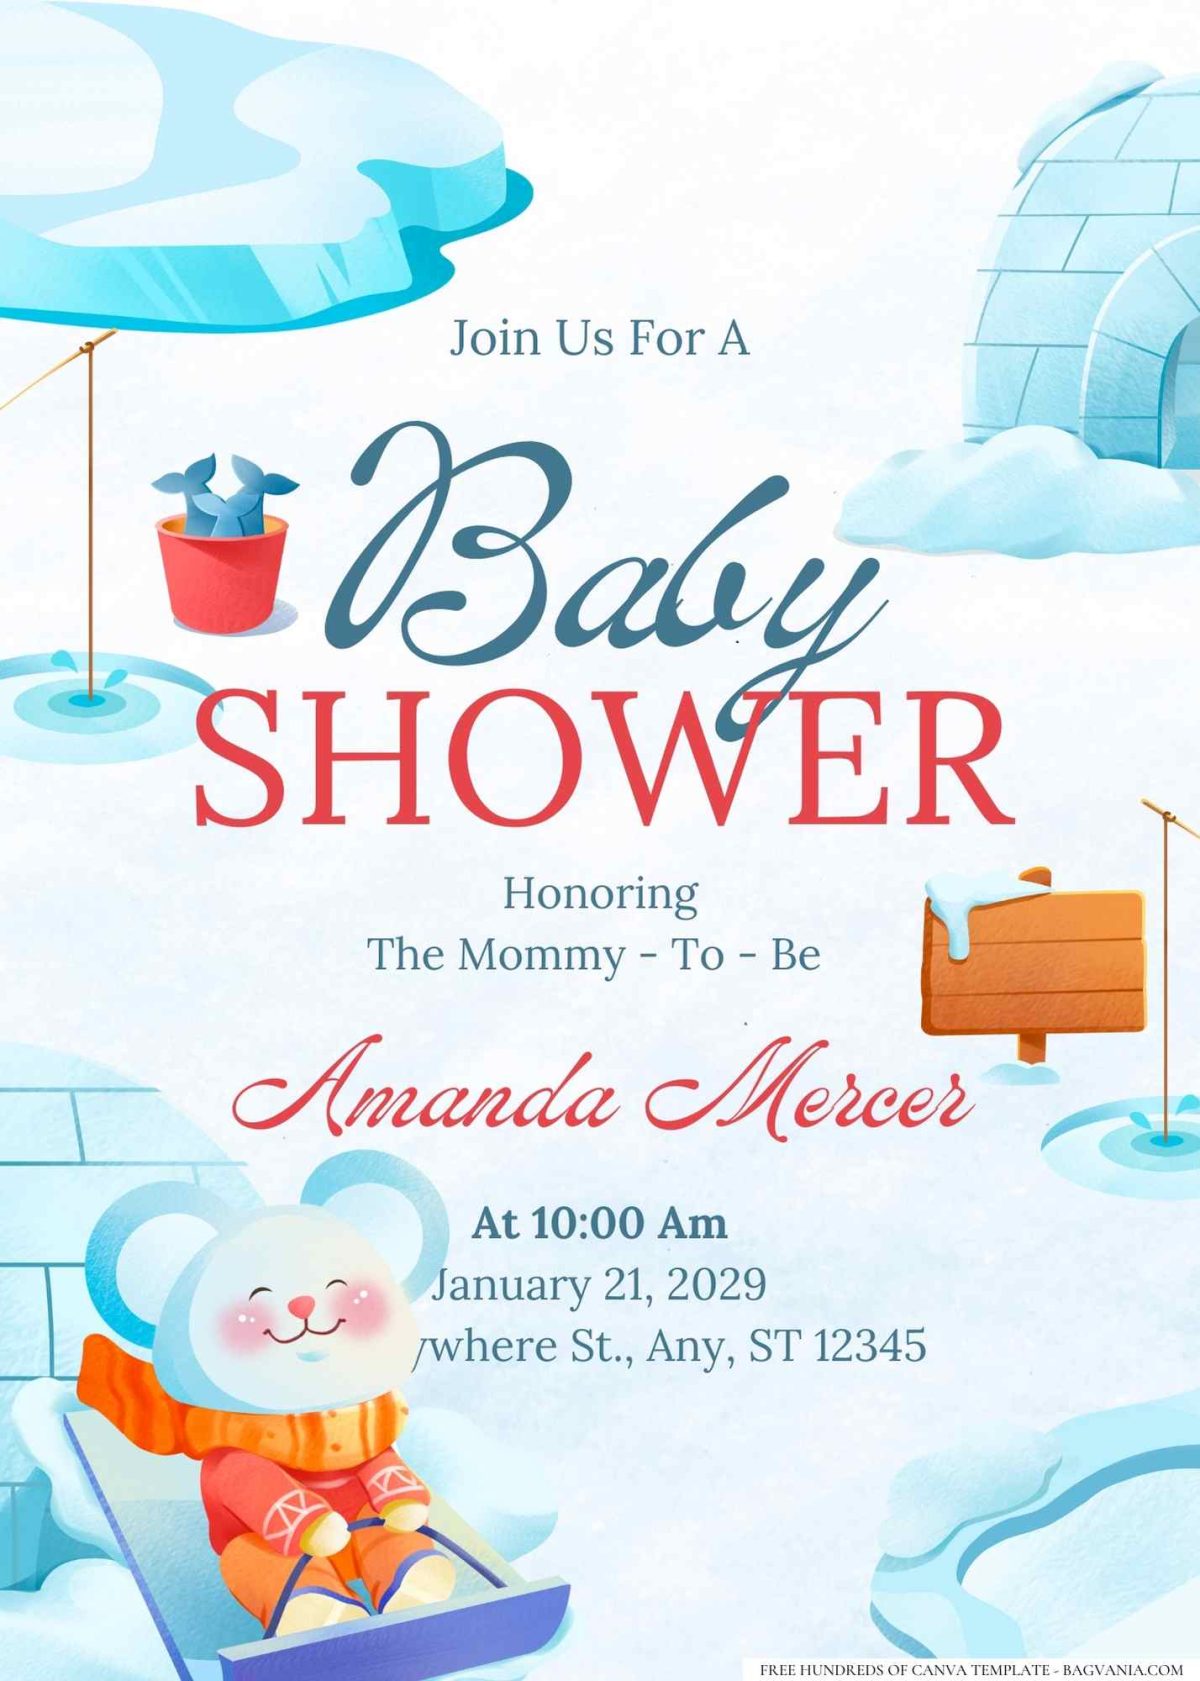 FREE Editable Winter Wonderland Snowflake Baby Shower Invitation